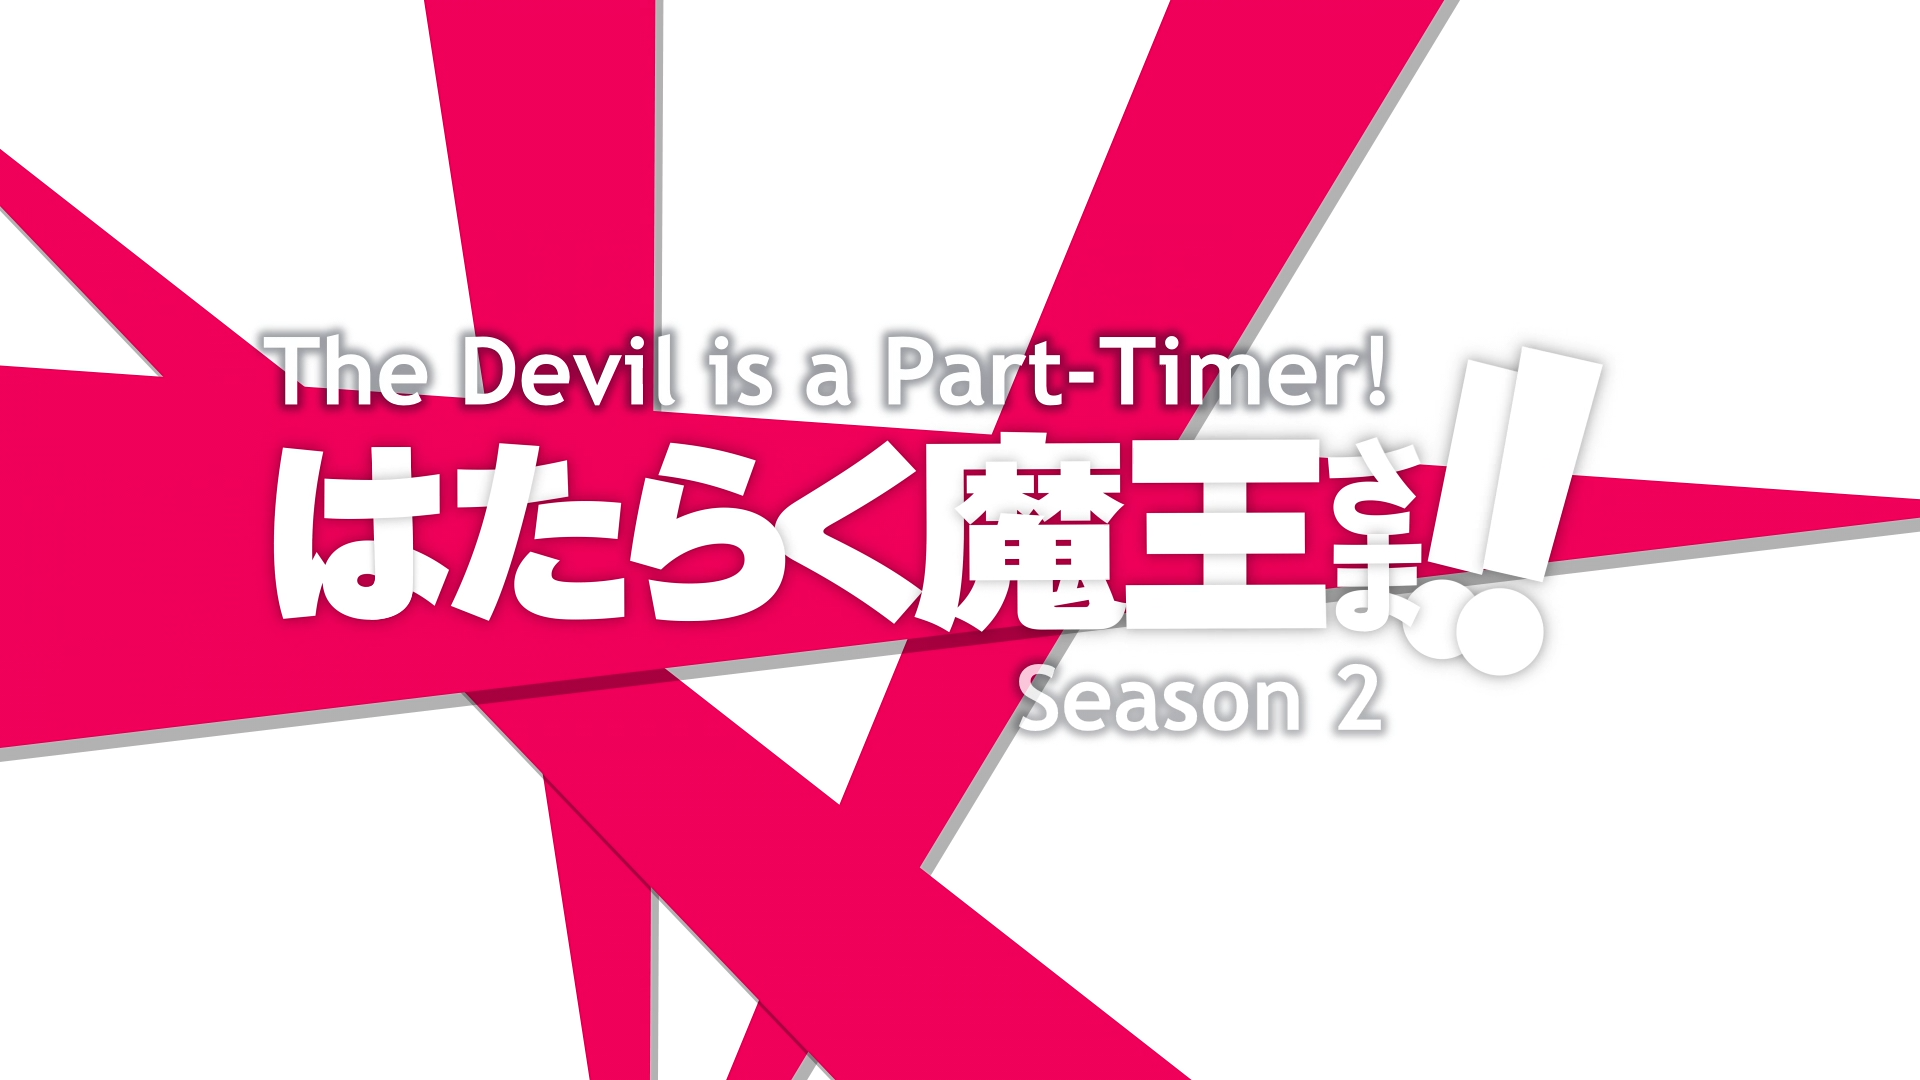 The Devil is a Part-Timer Season 2